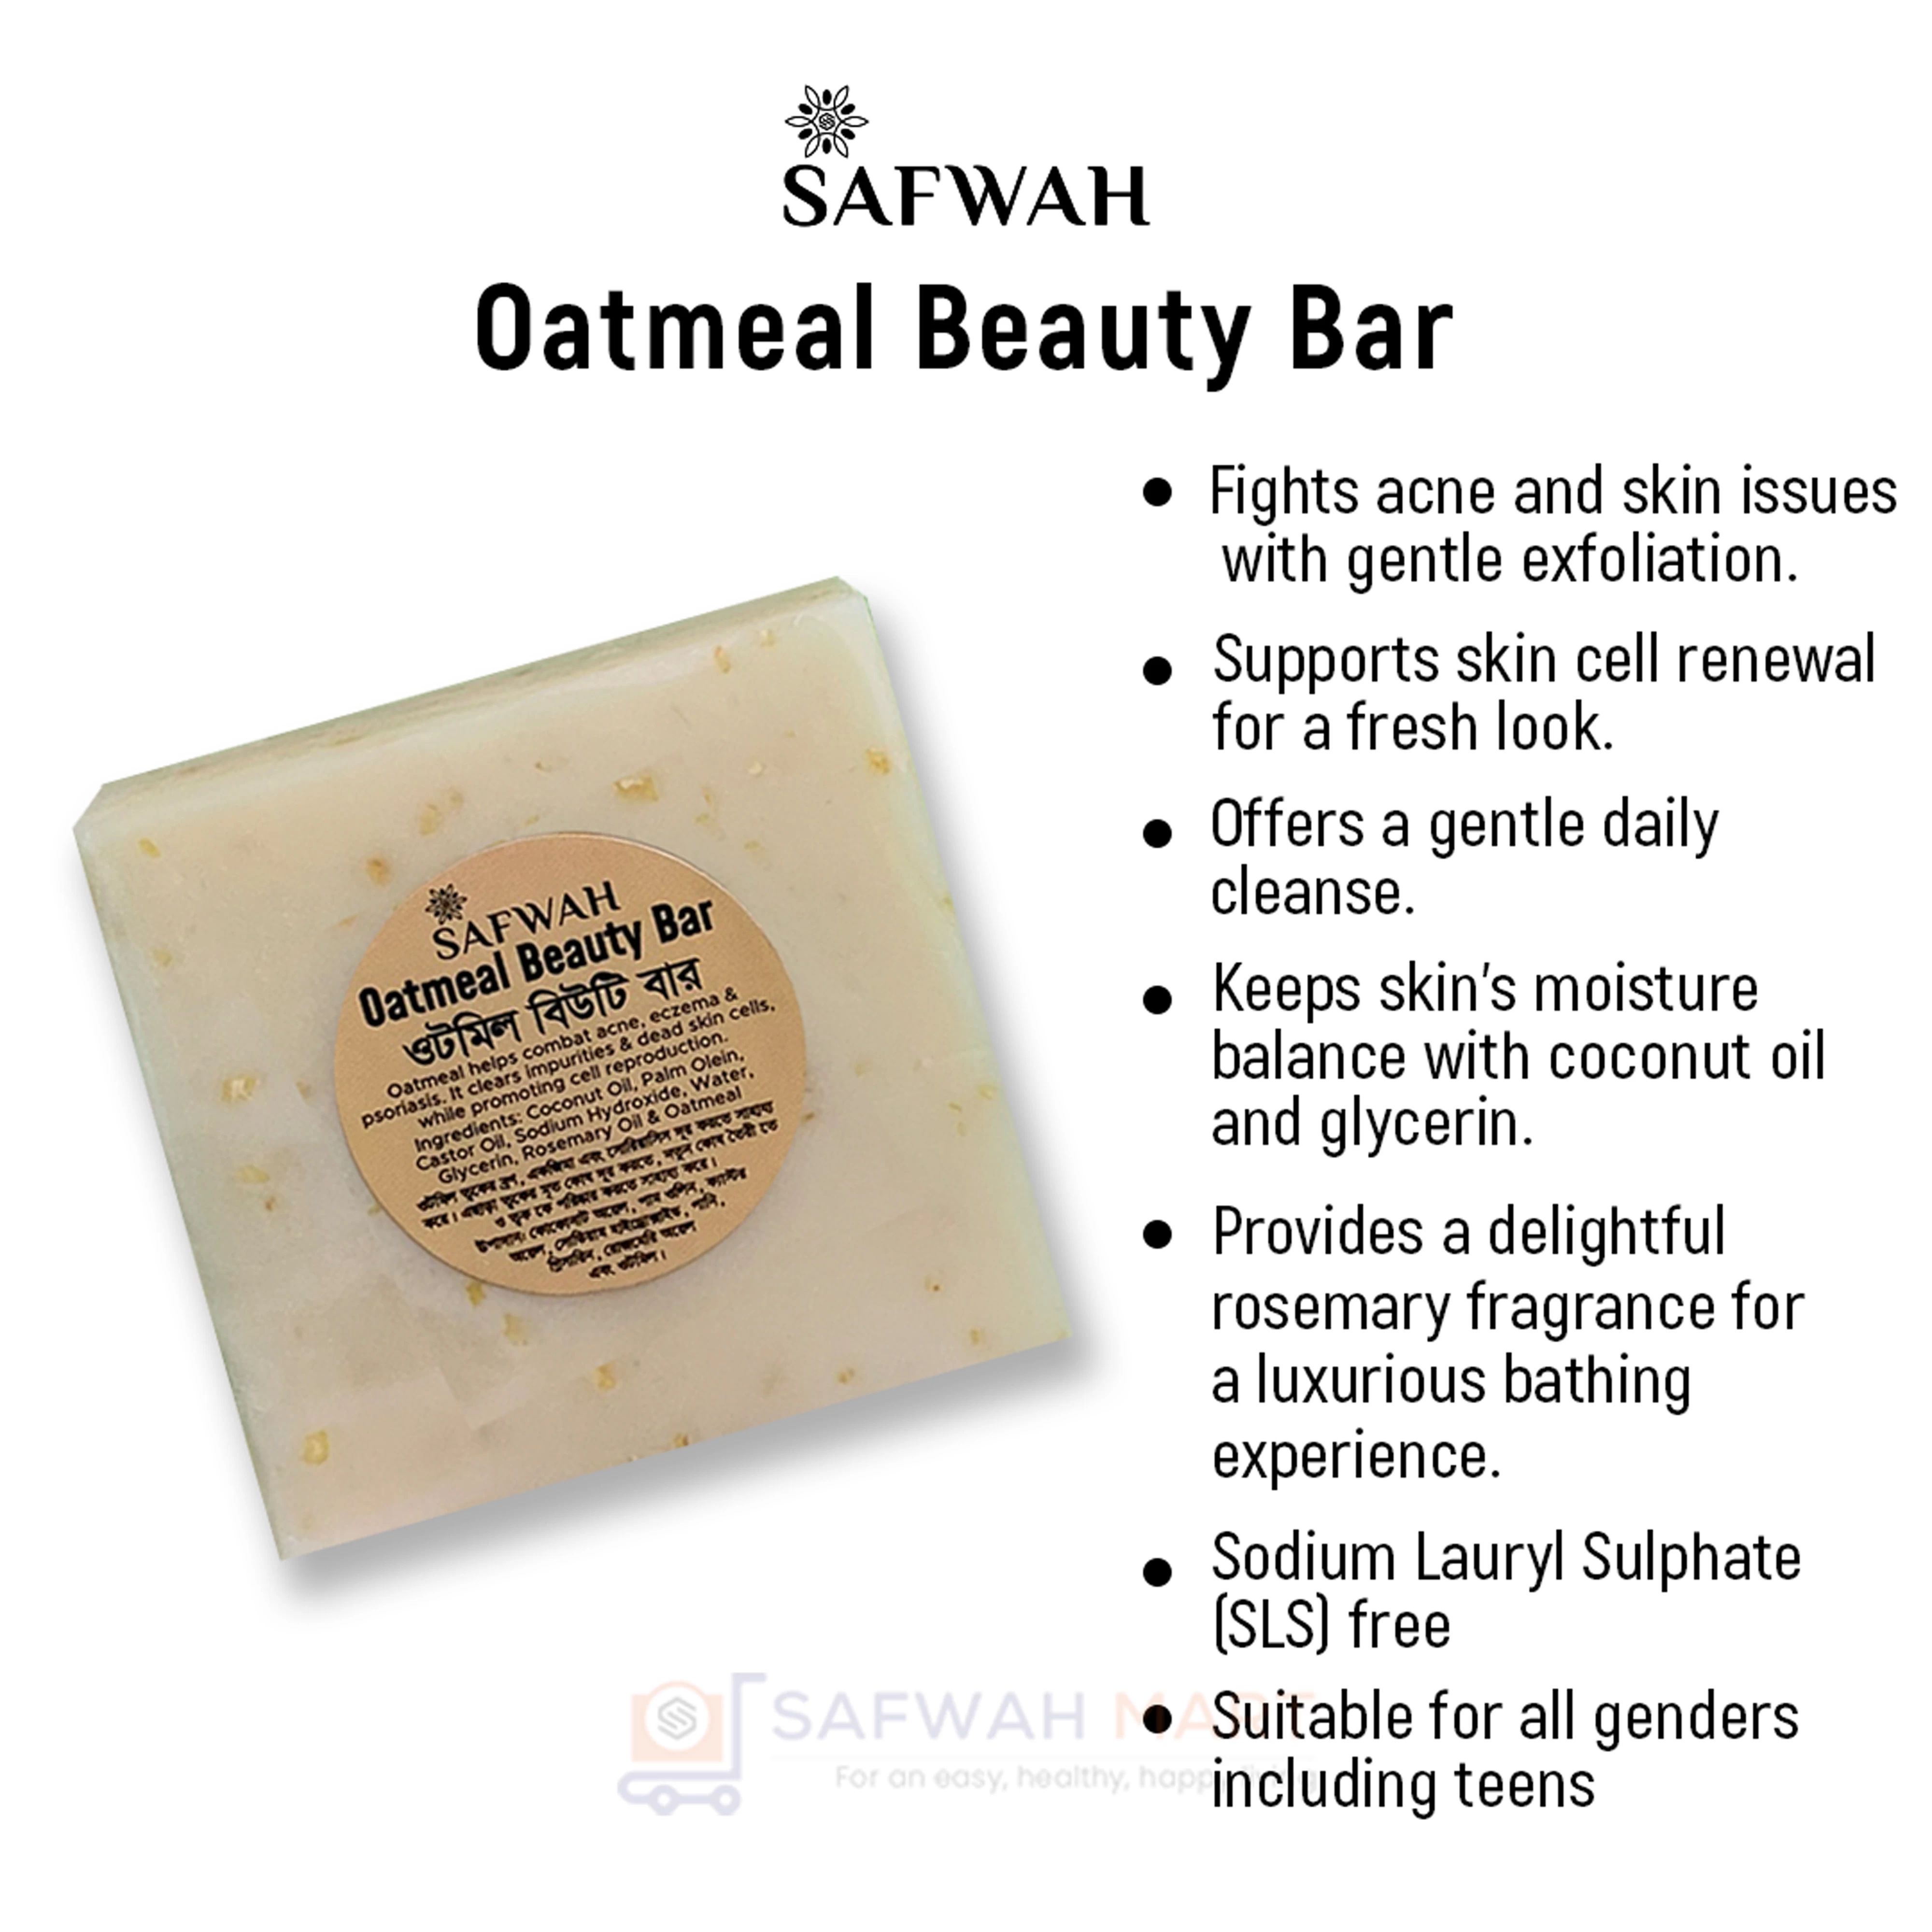 Safwah Oatmeal Beauty Bar